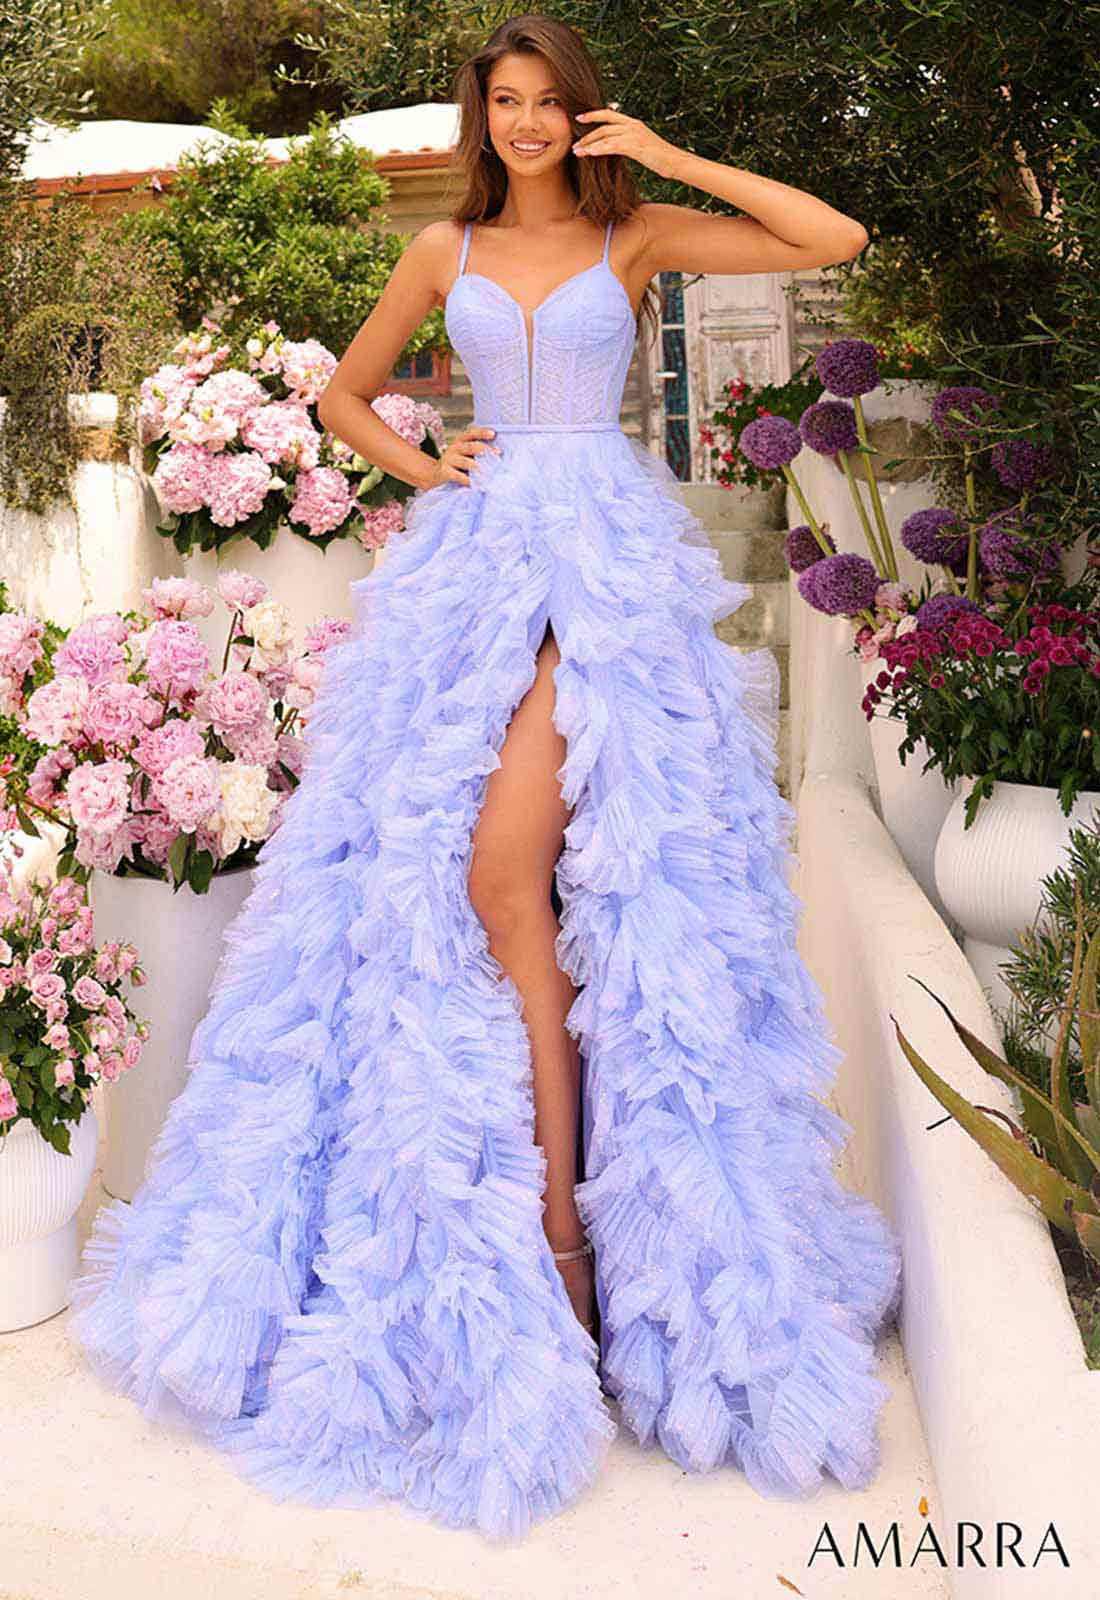 Amarra Perwinkle Jenner Prom Dress